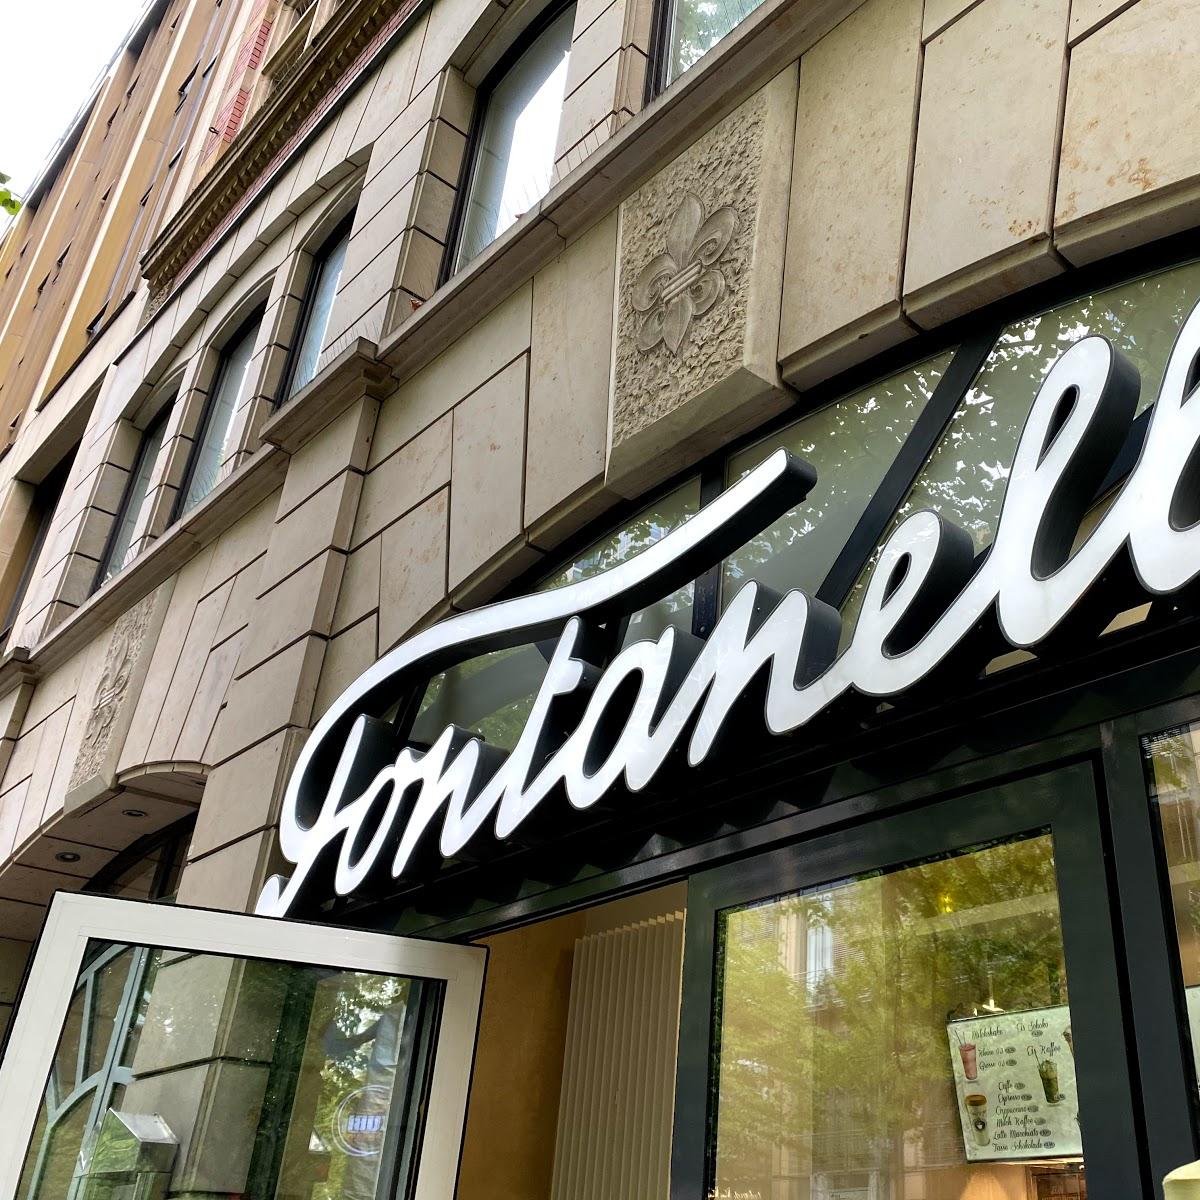 Restaurant "Eis Fontanella" in Frankfurt am Main